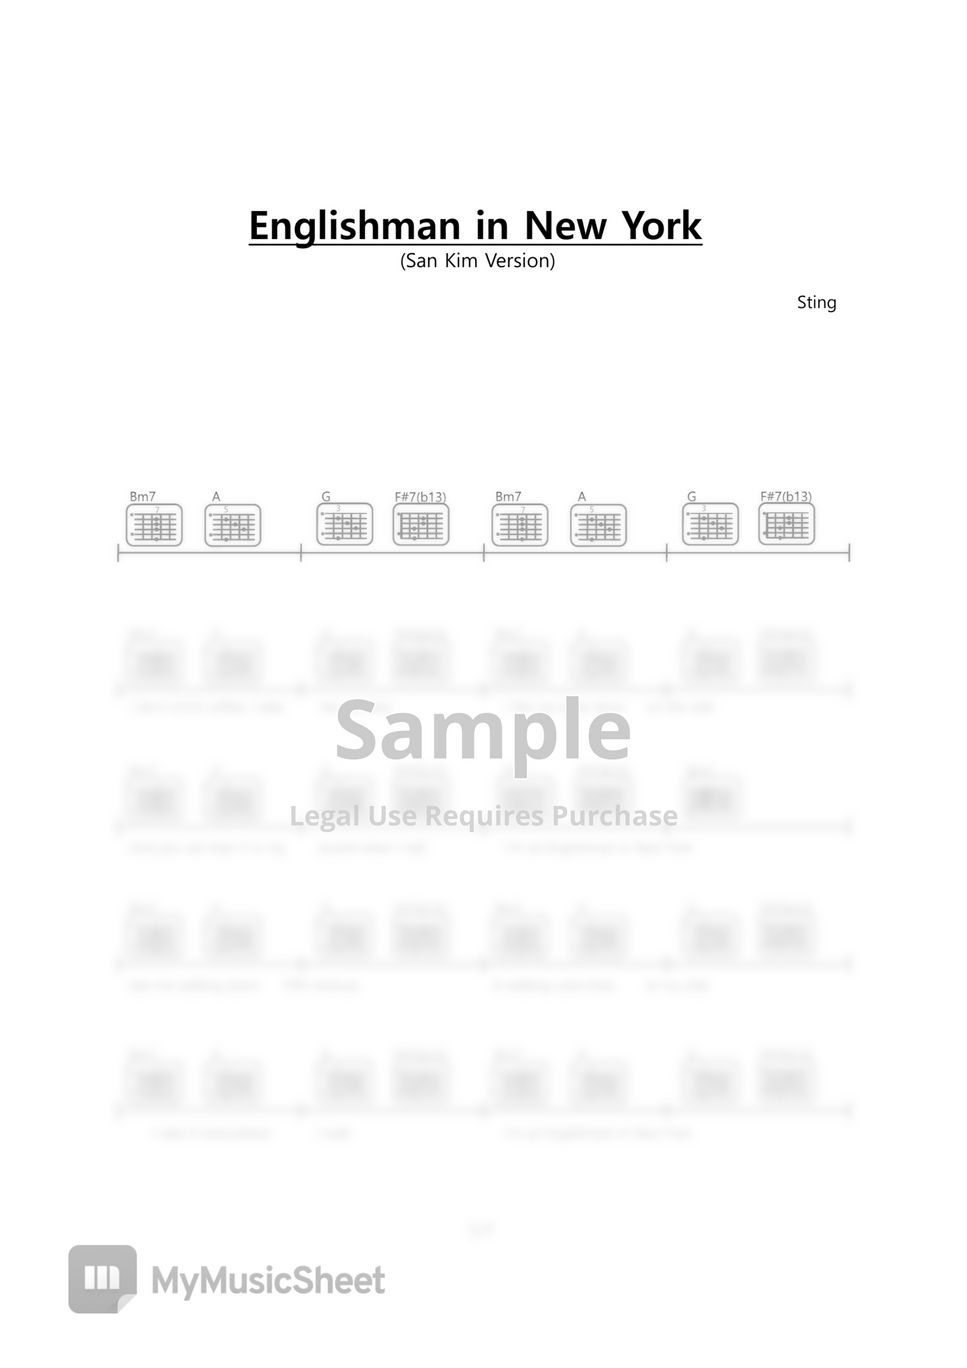 Sting - Englishman In NewYork Chords score (Sam Kim version)